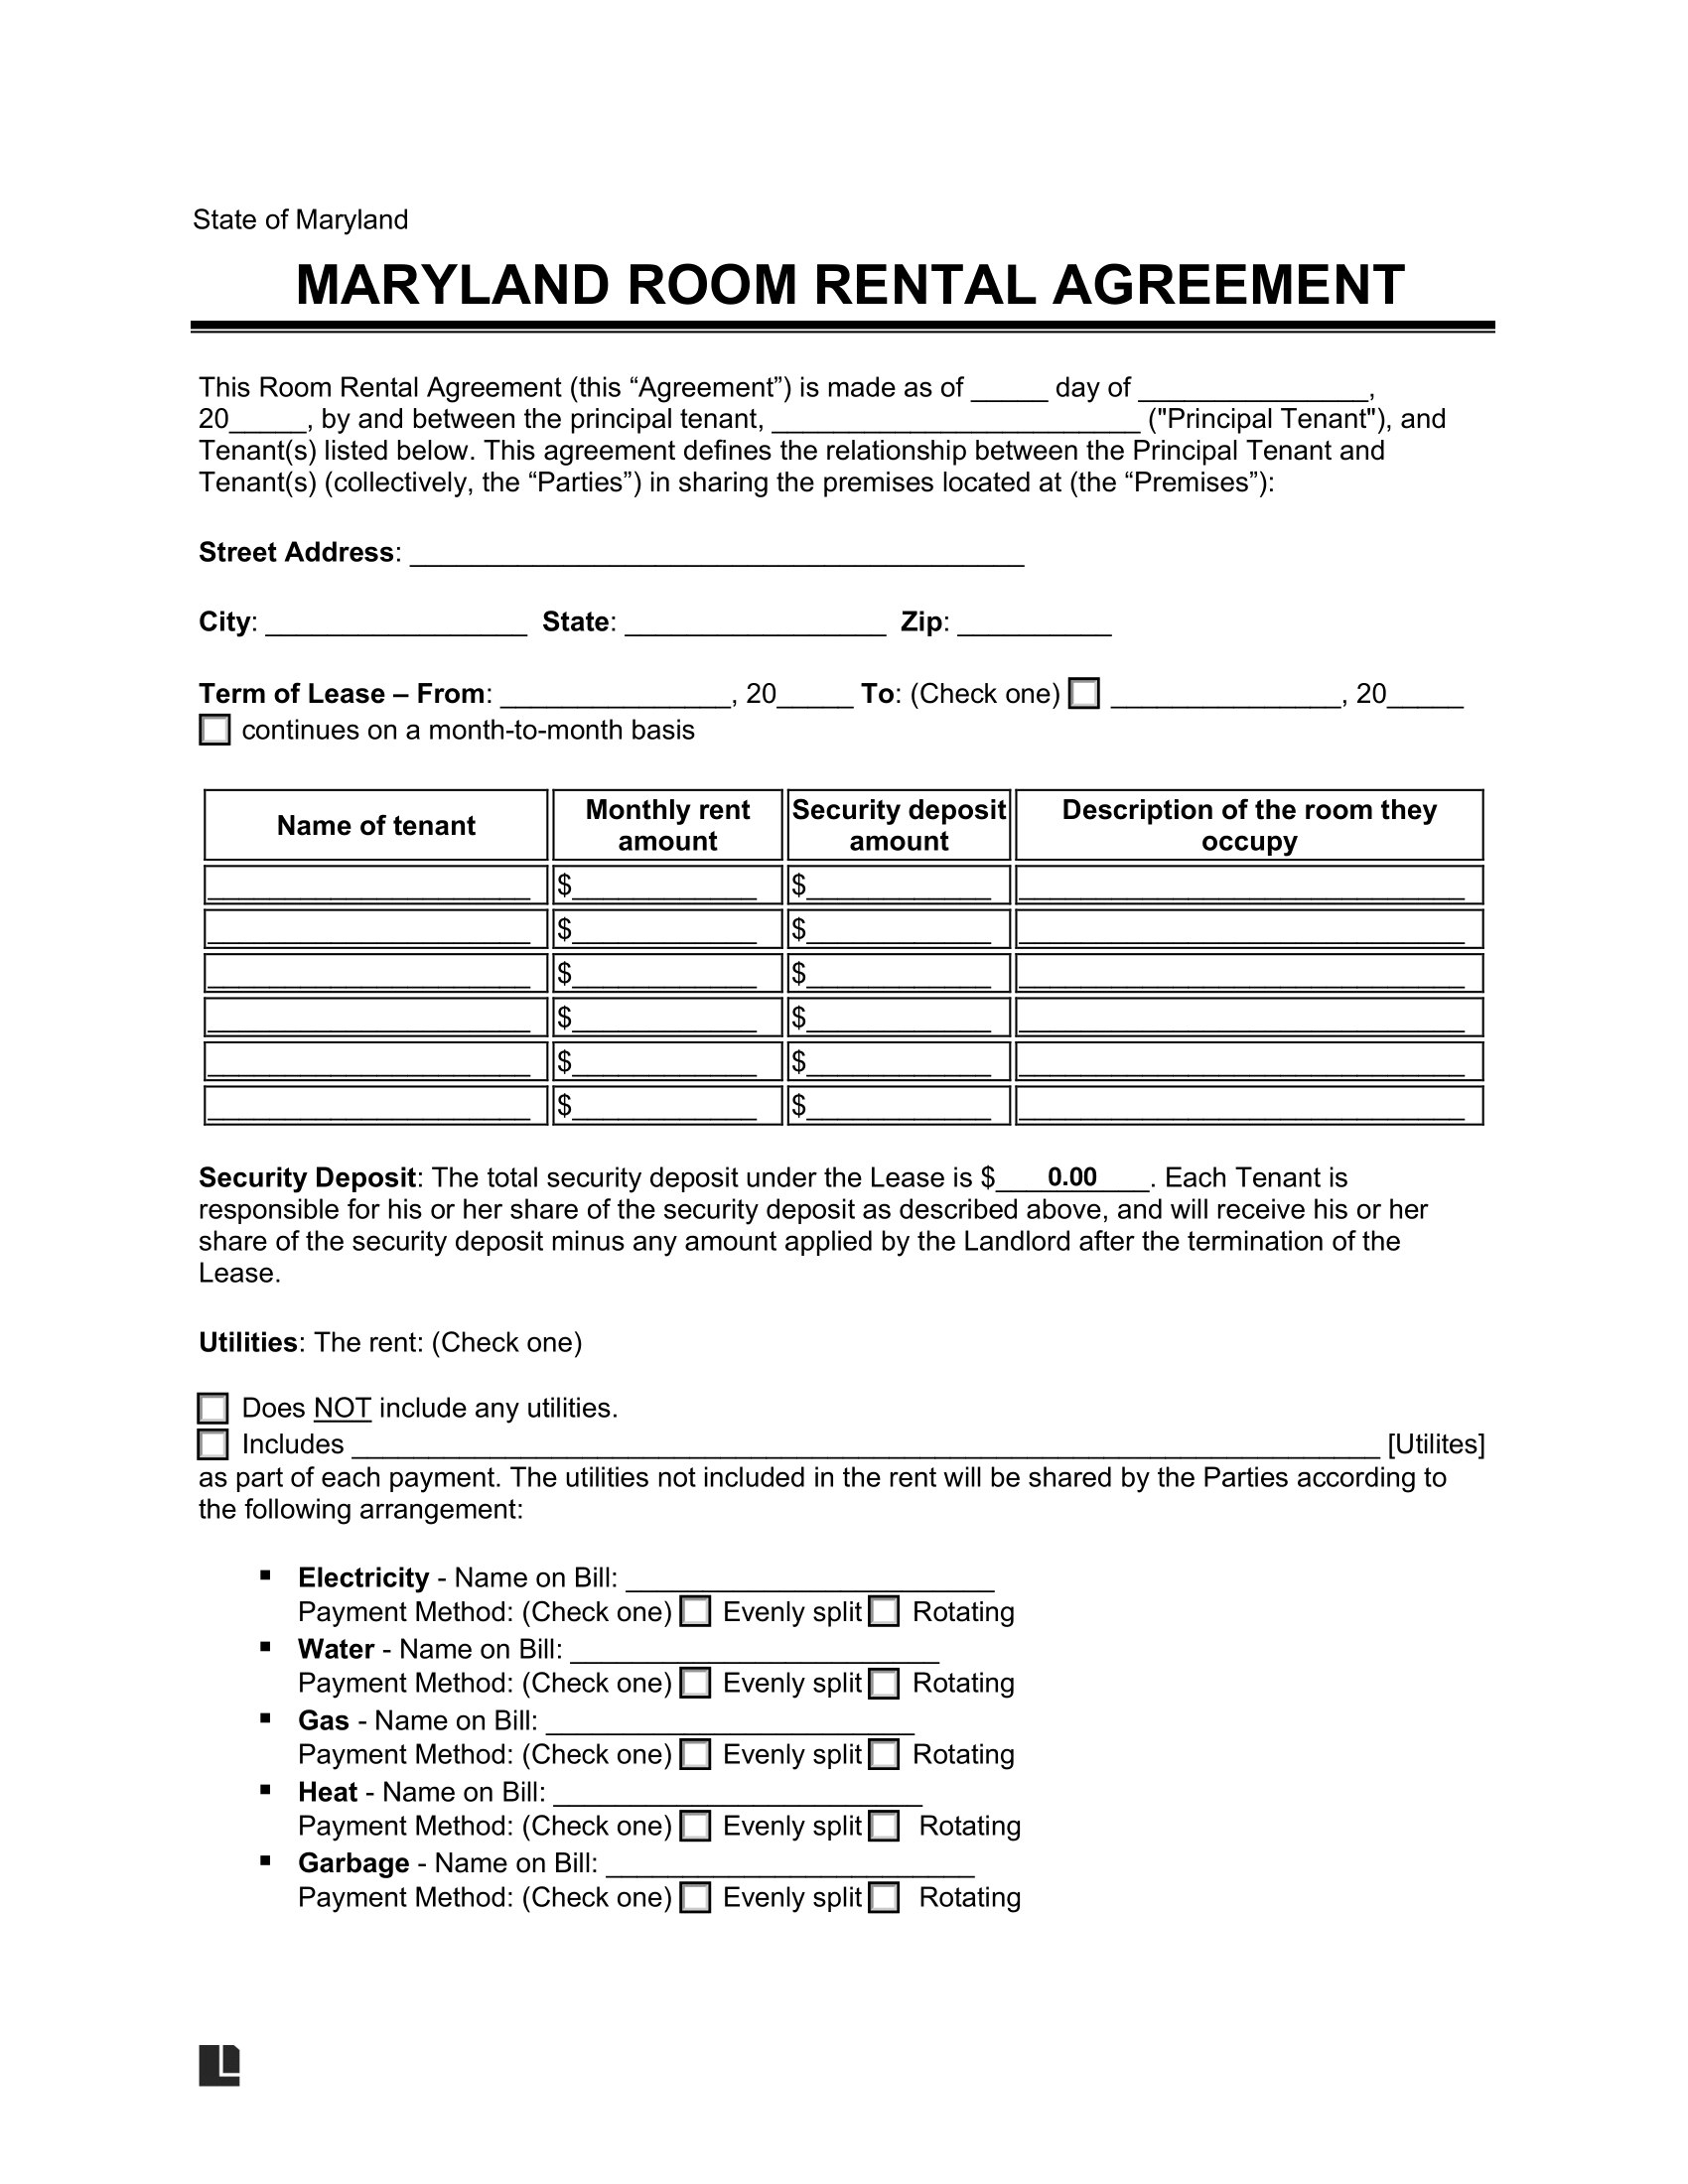 Maryland Room Rental Agreement